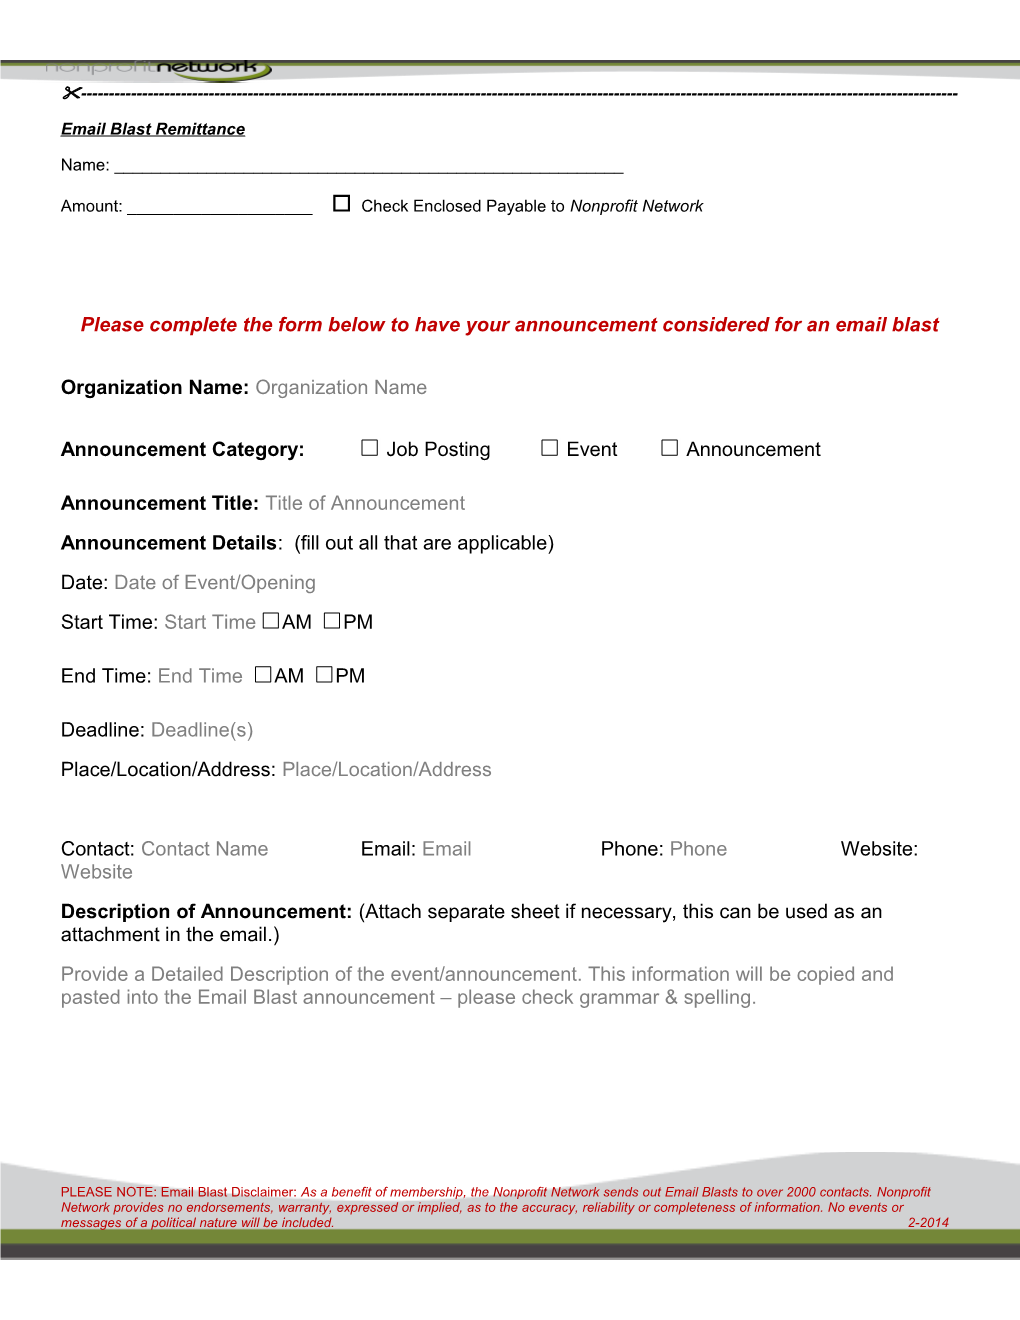 Event / Announcement / Job Posting Request Form